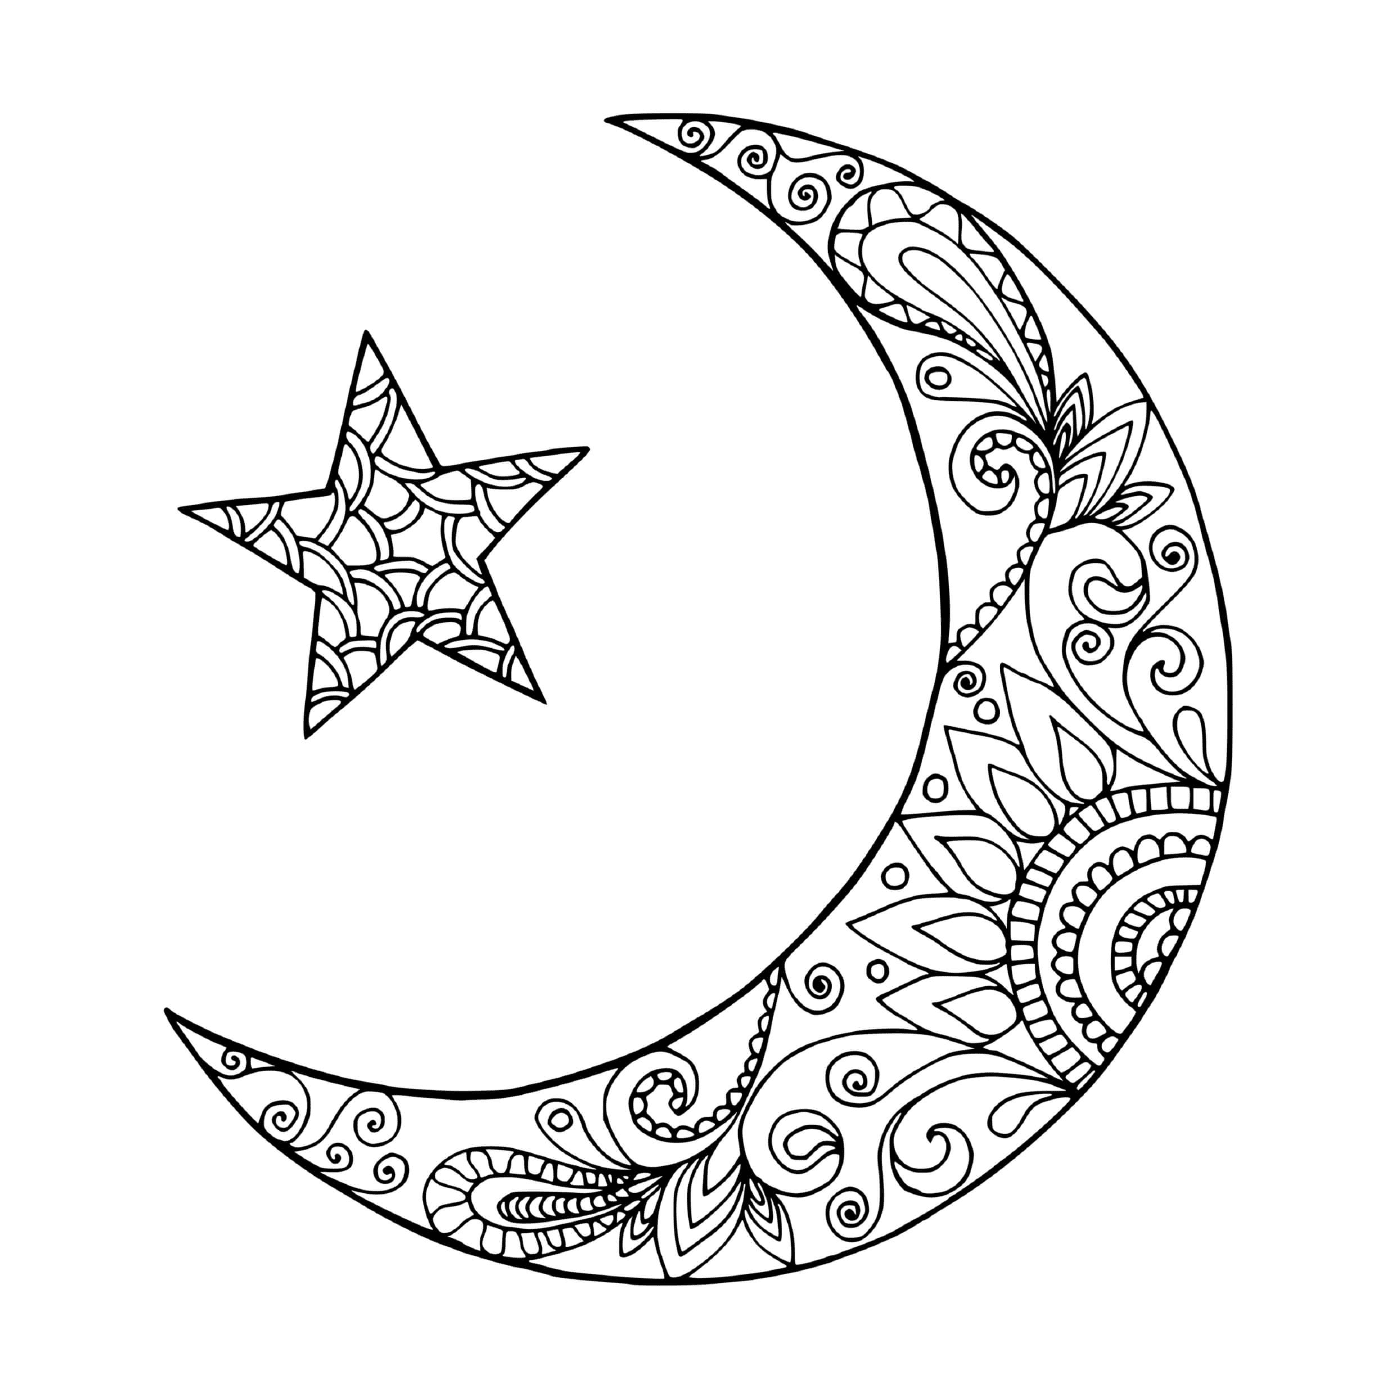  Luna a forma di mezzaluna e stella 